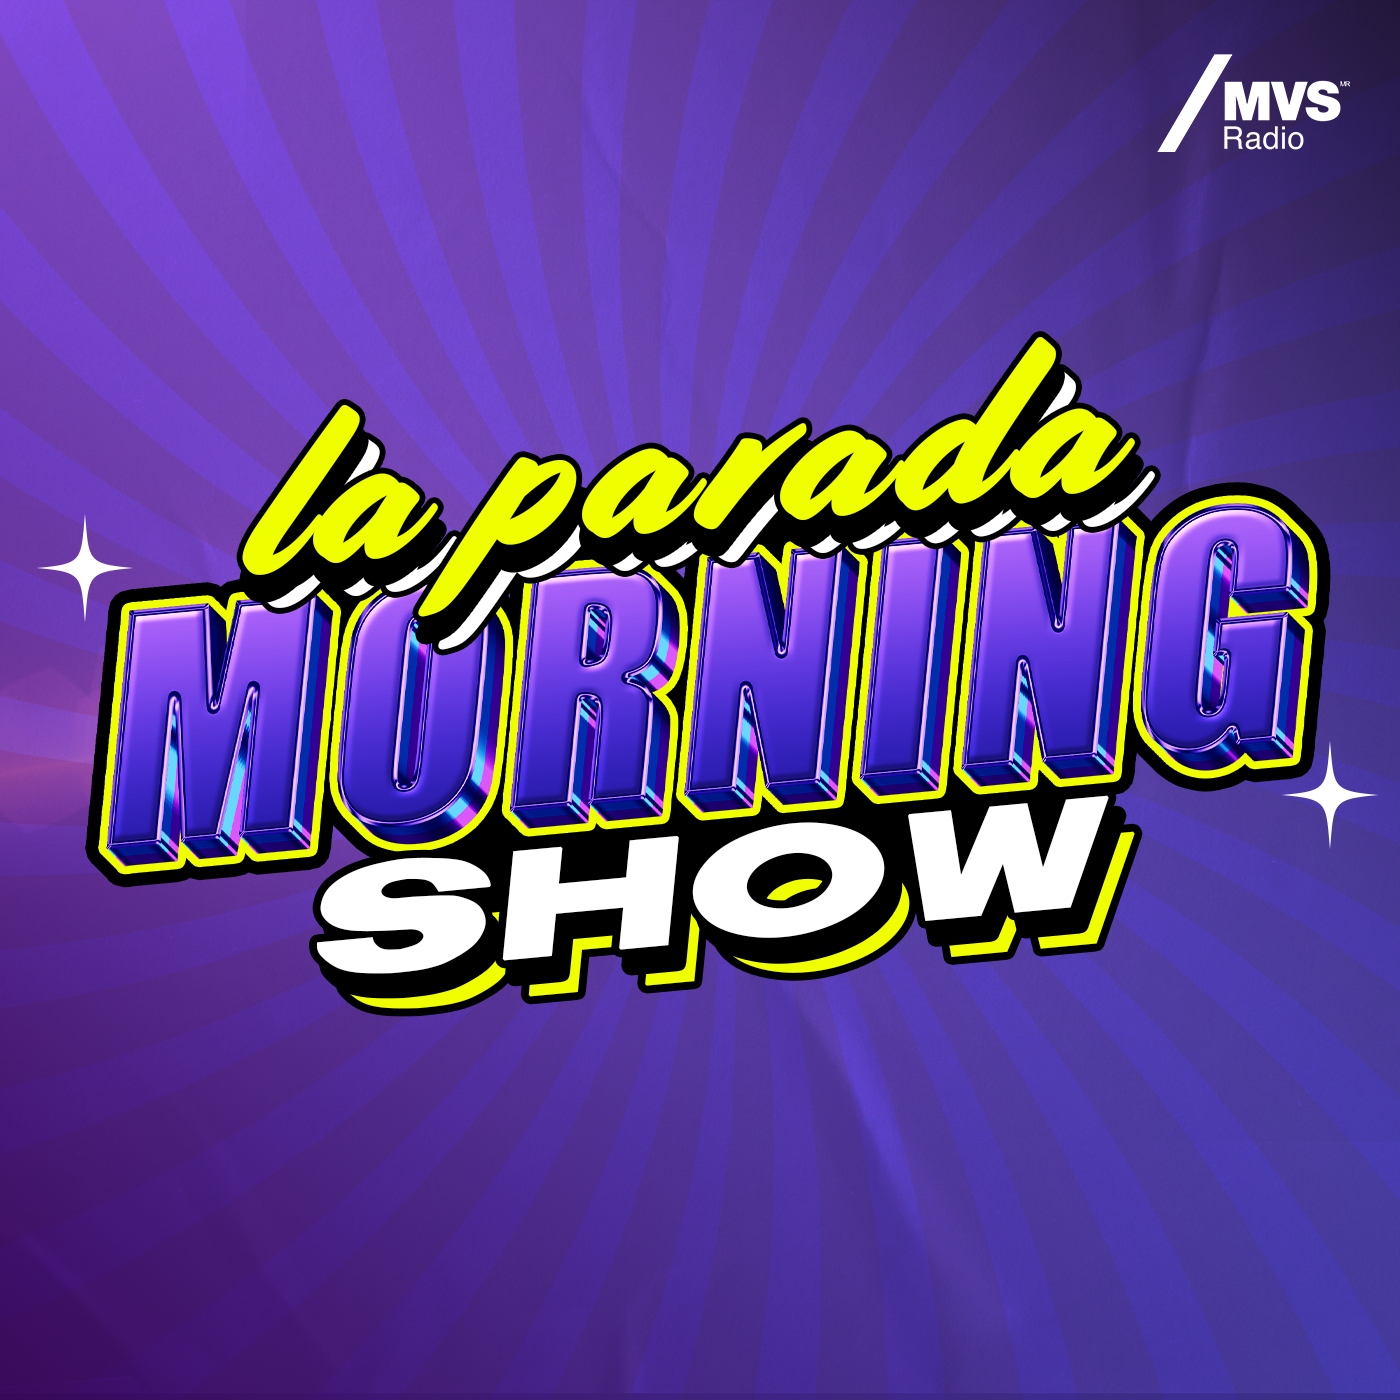 La Parada Morning Show